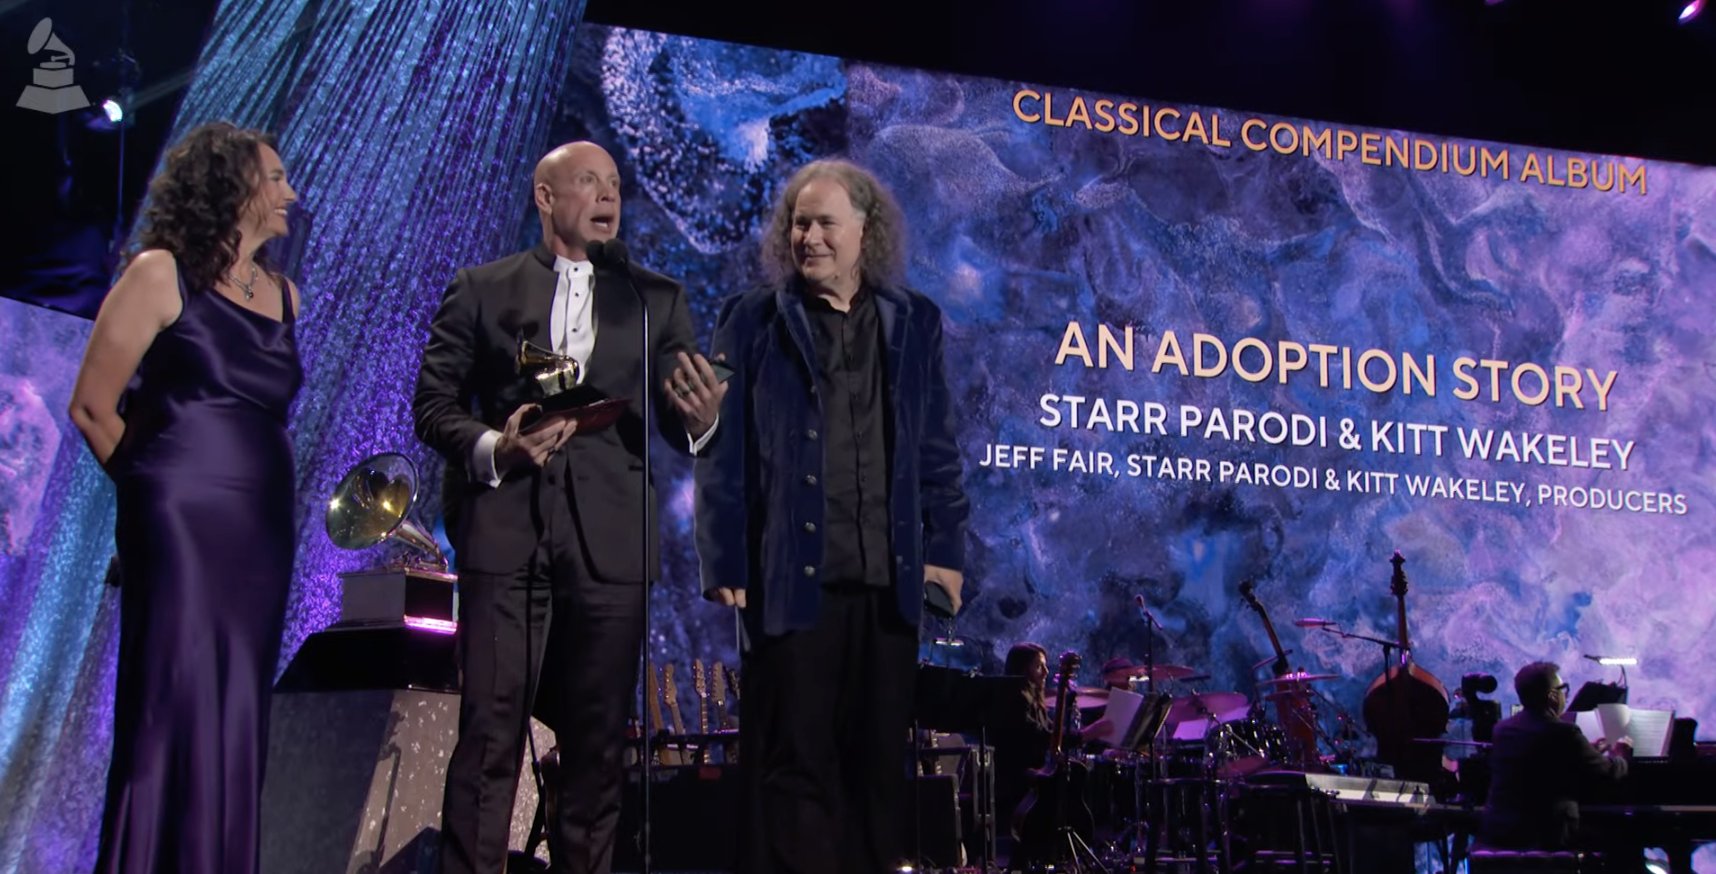 Premios Grammy 2023:  Starr Parodi y Kitt Wakeley fueron galardonados por “An adoption story”